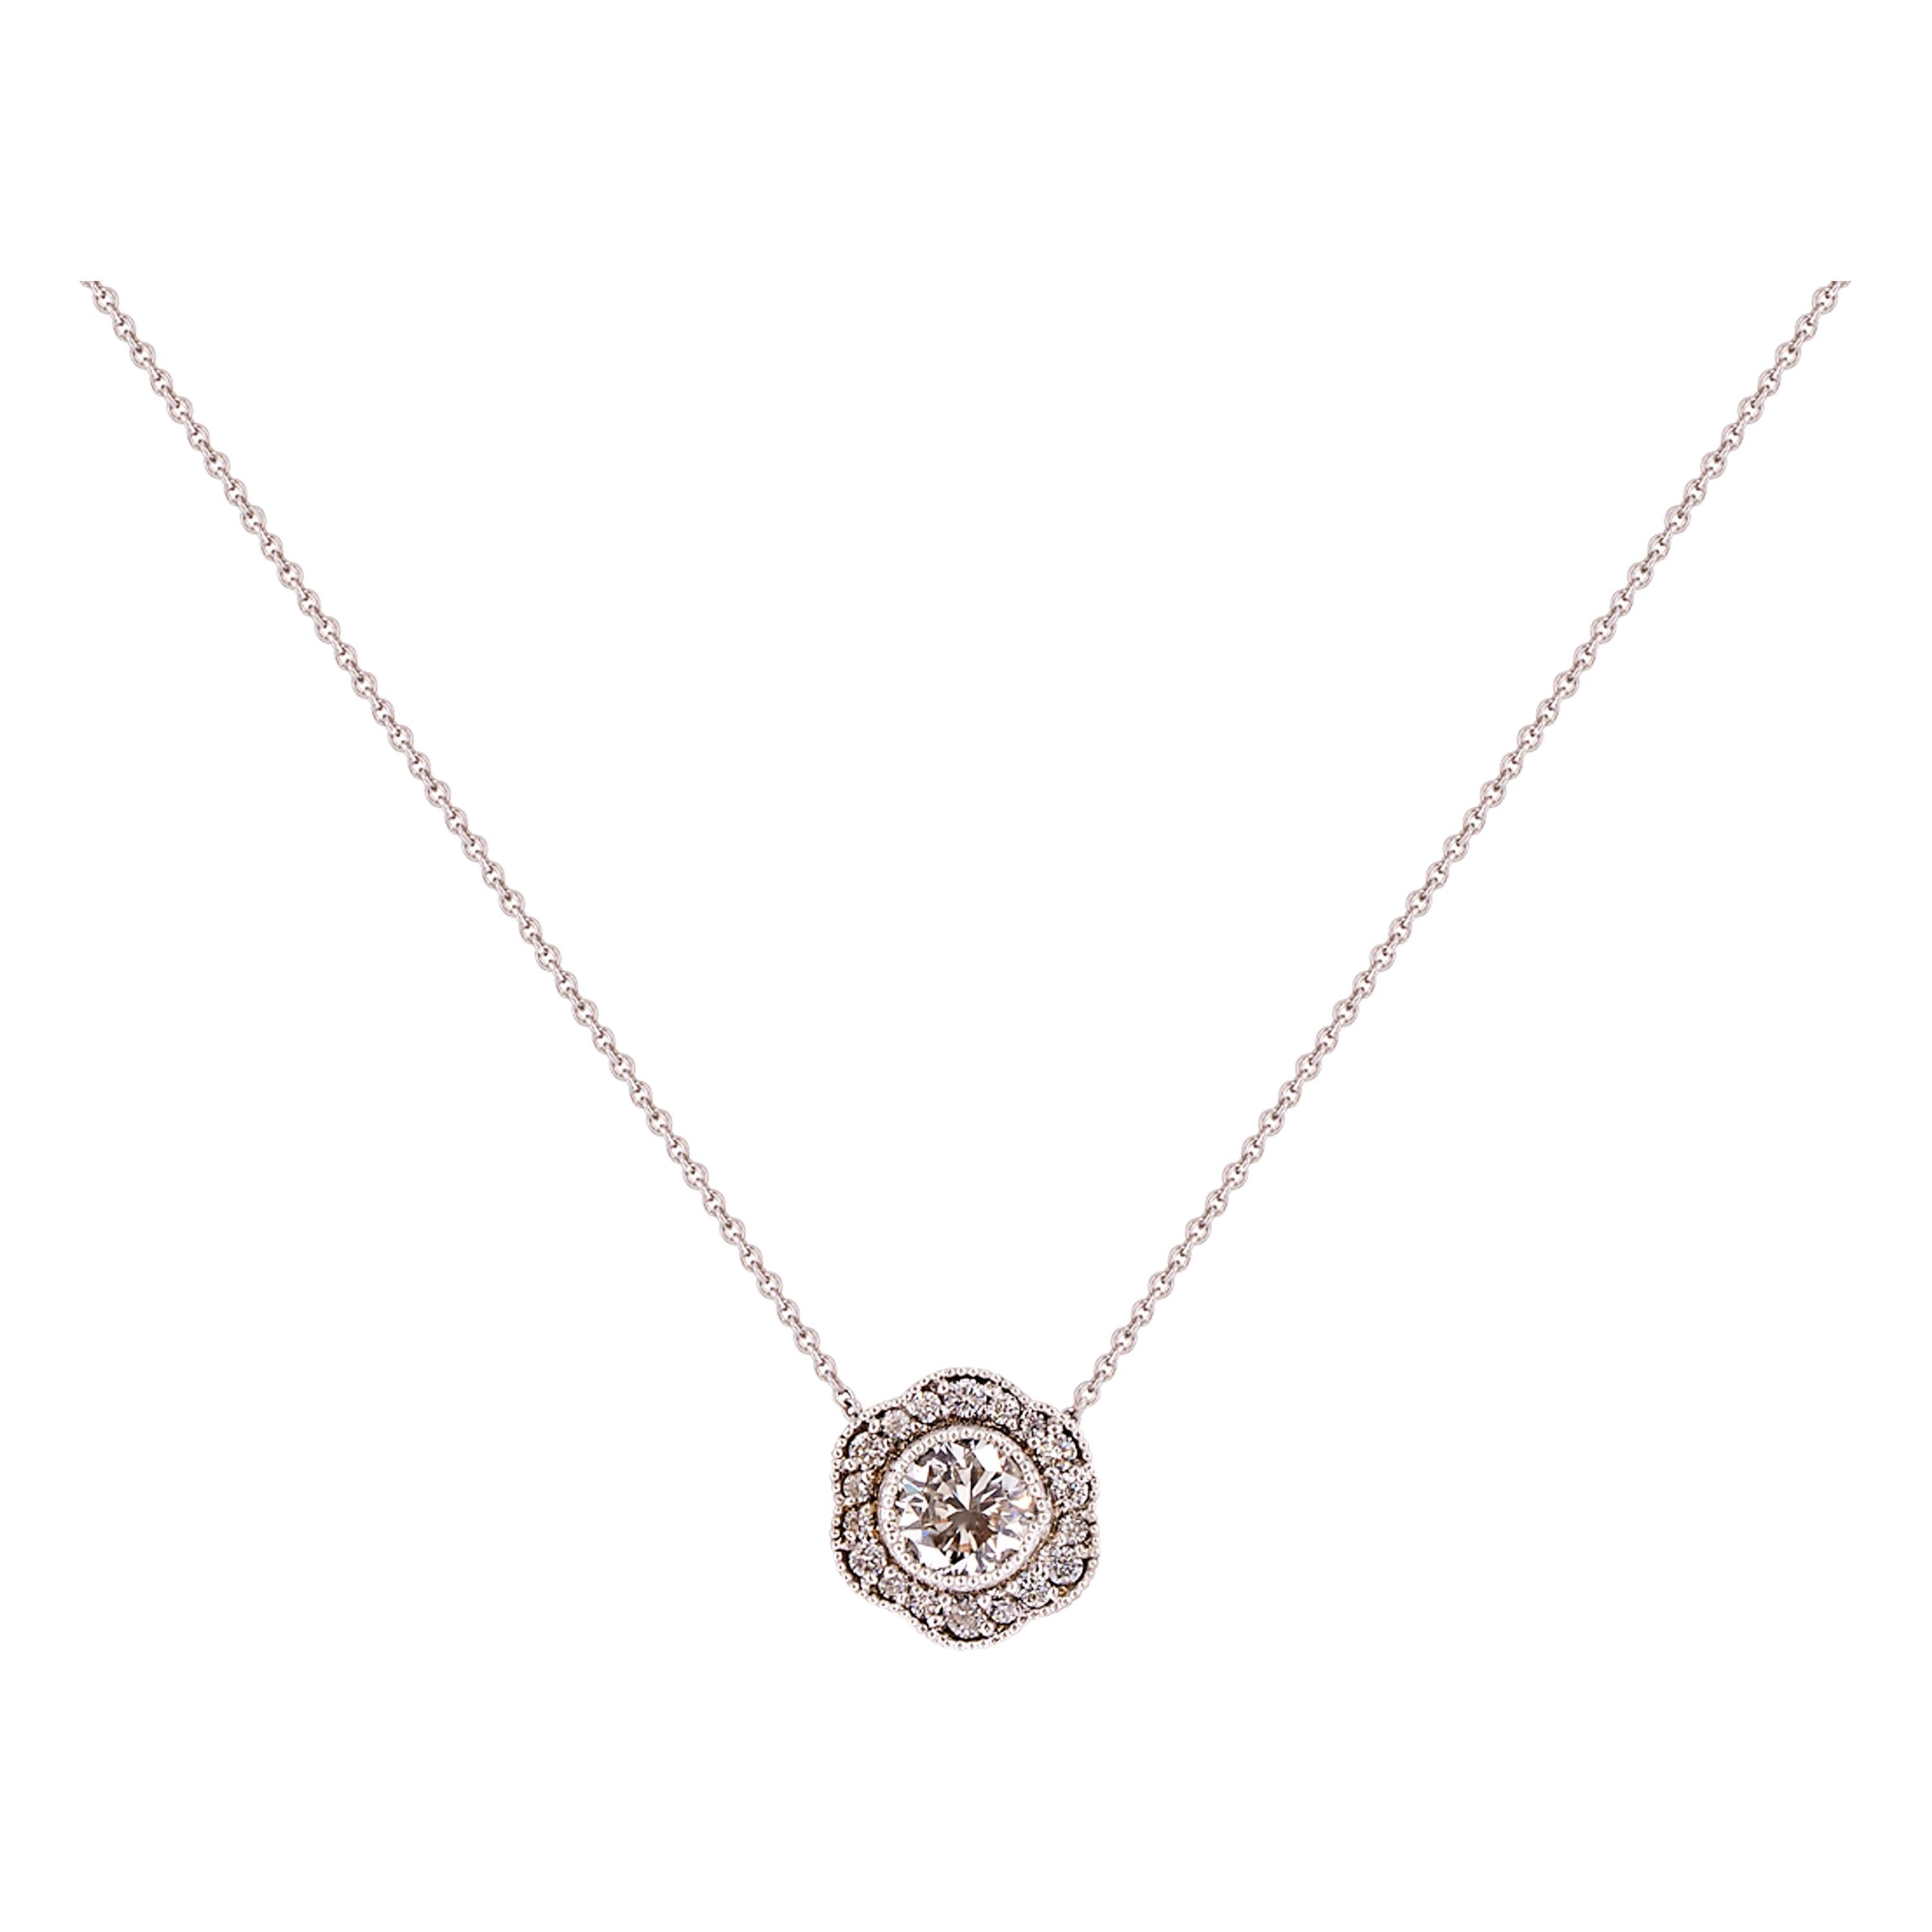 Floral Design Diamond Halo Pendant Necklace 14K White Gold